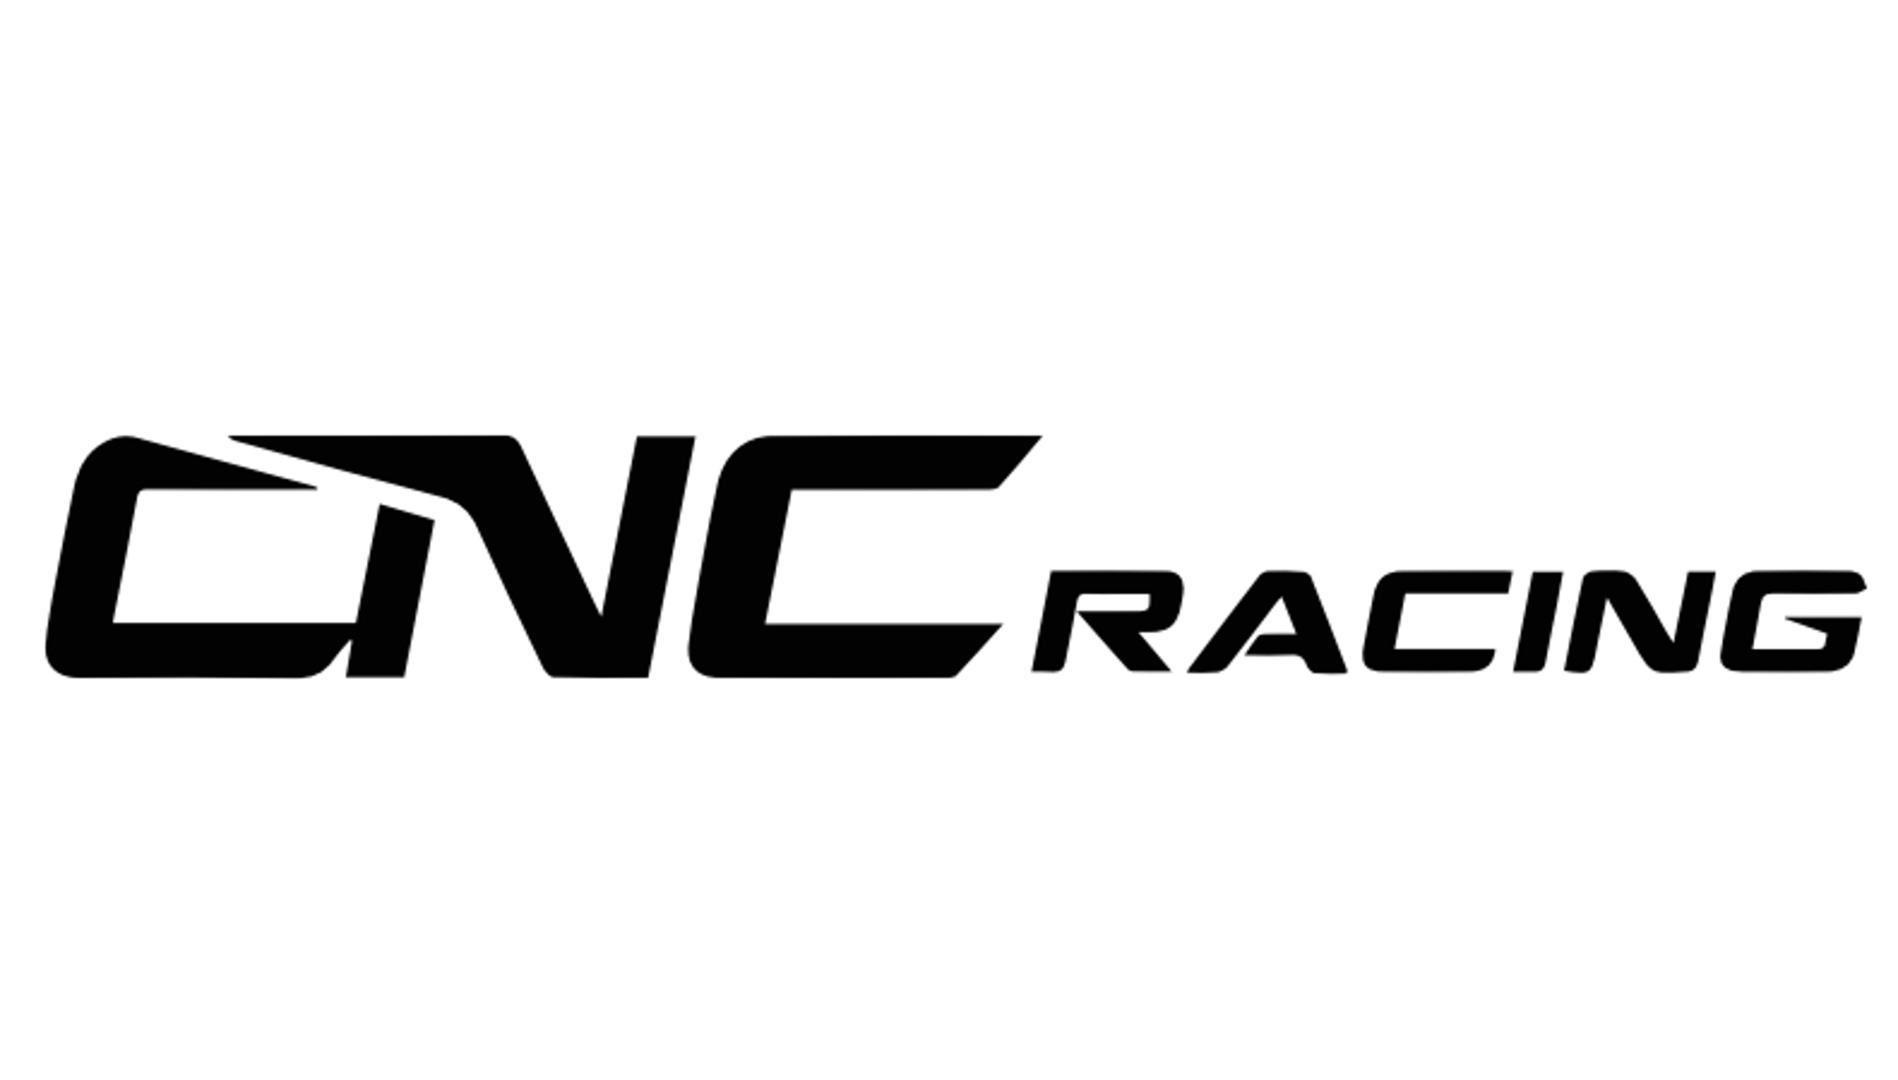 cnc-racing-CNC RACING.jpg